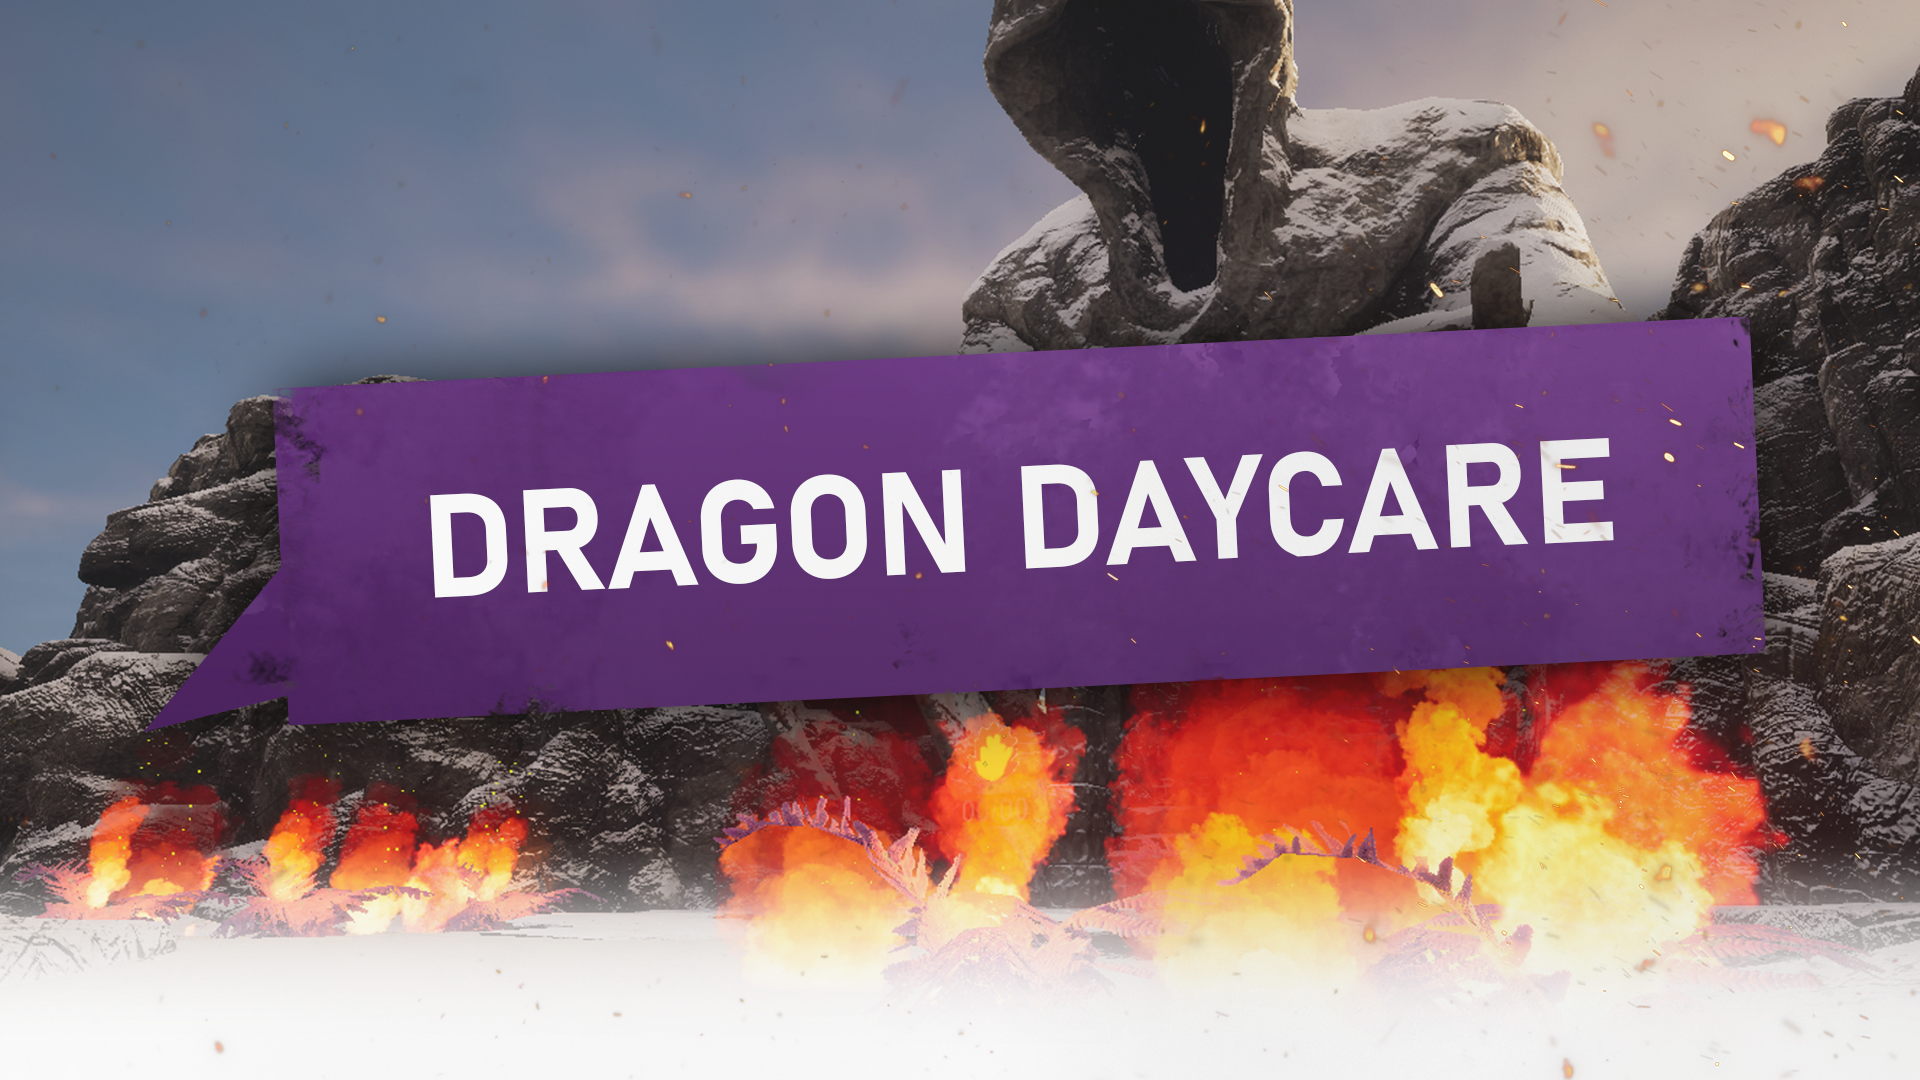 Dragon Daycare